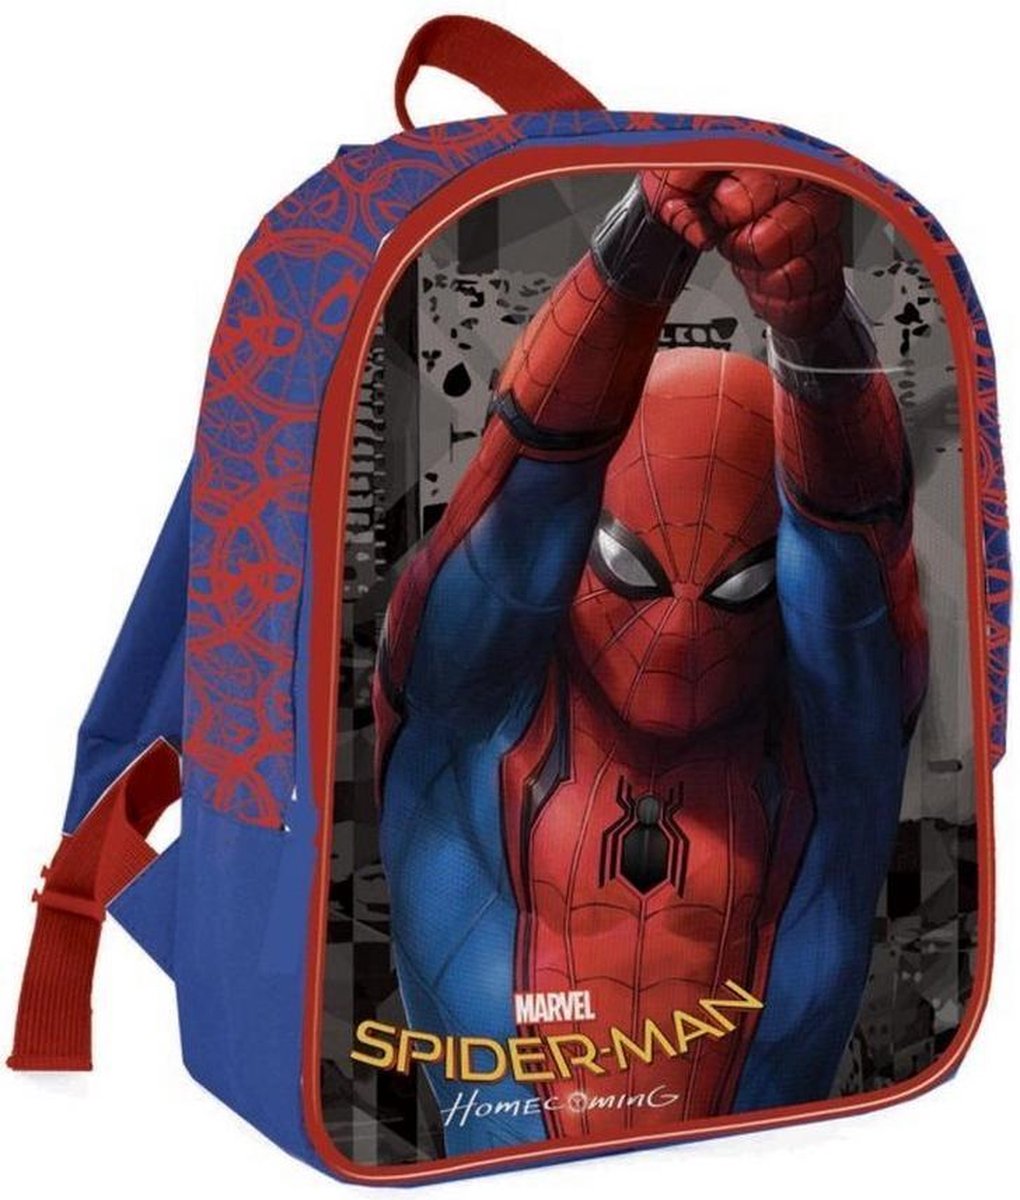 Spiderman - Homecoming Rugzak 27 cm hoog rood en blauw - Spider-Man